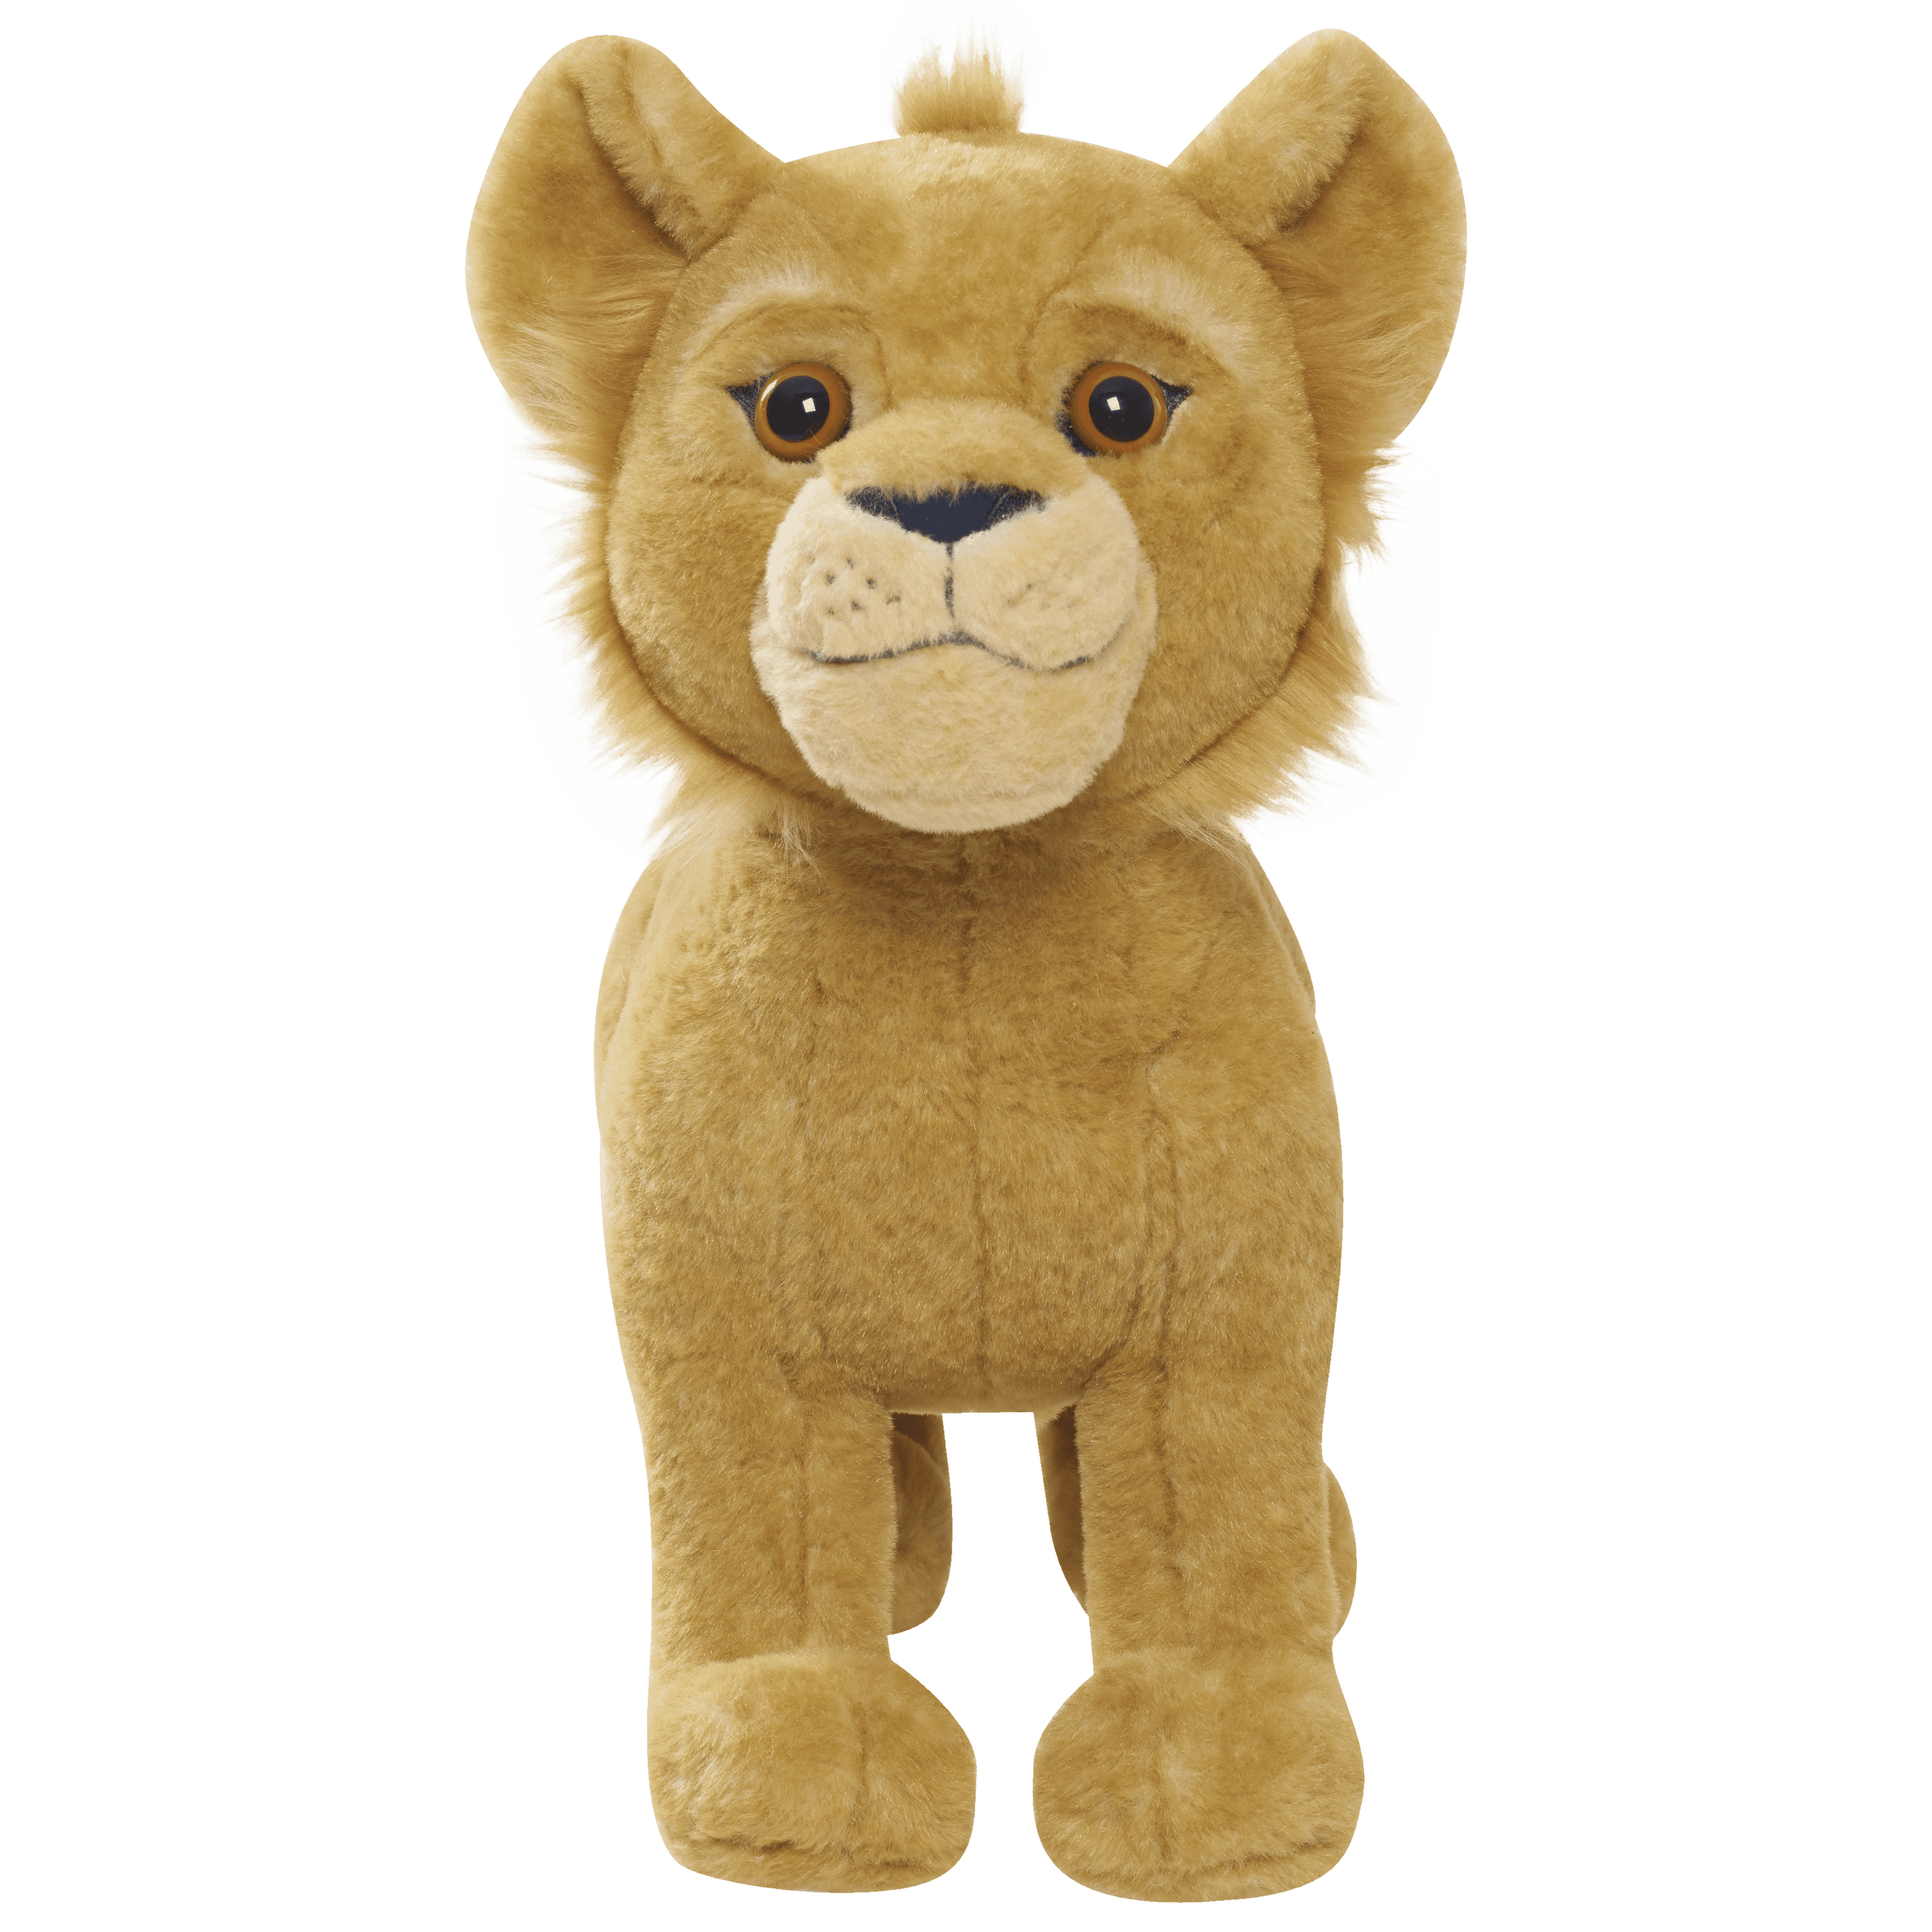 simba lion king stuffed animal